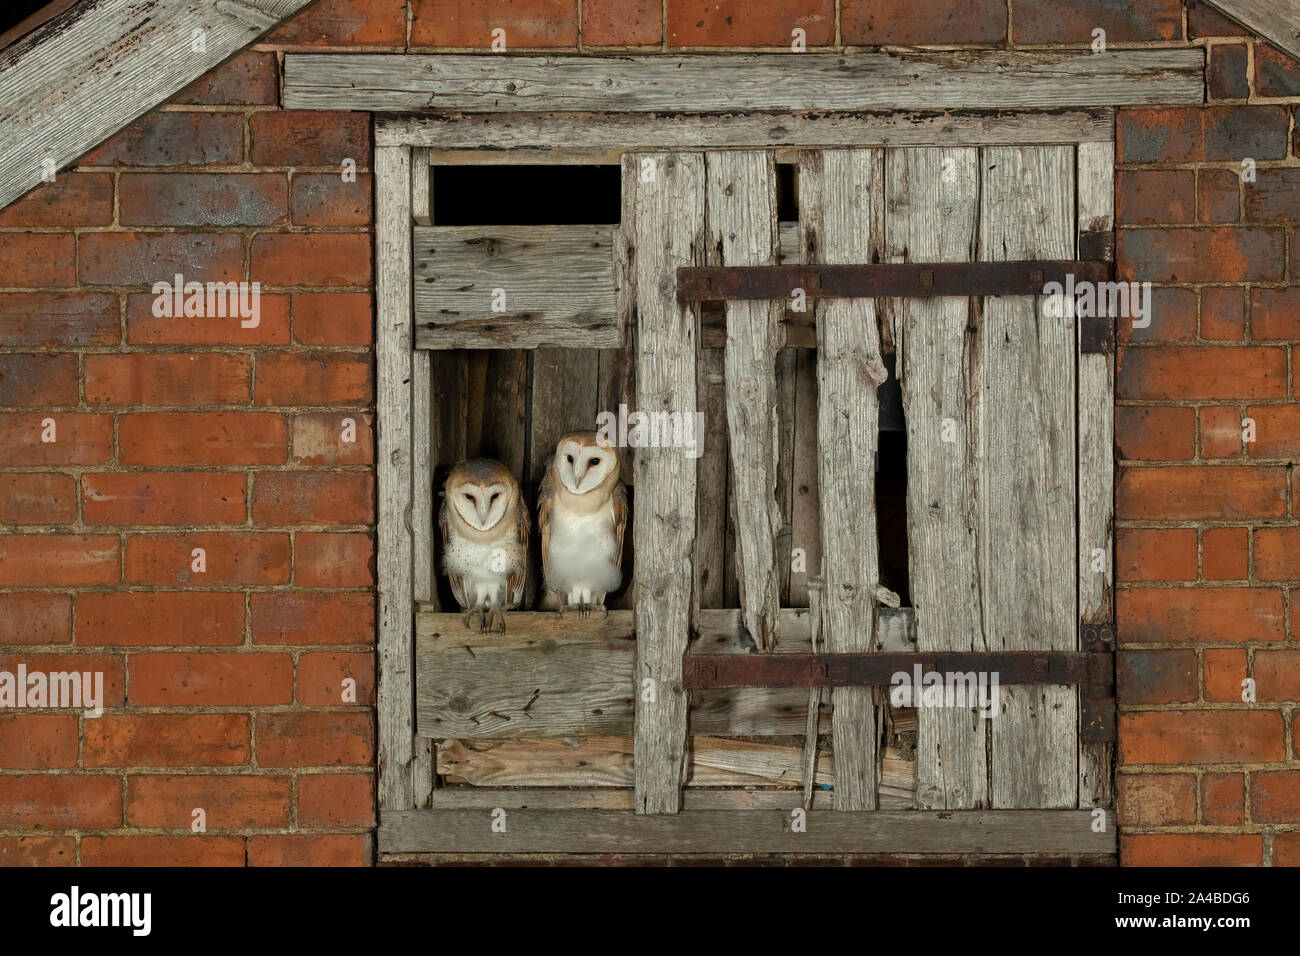 Barn owl (Tyto alba) fledging from a barn Stock Photo